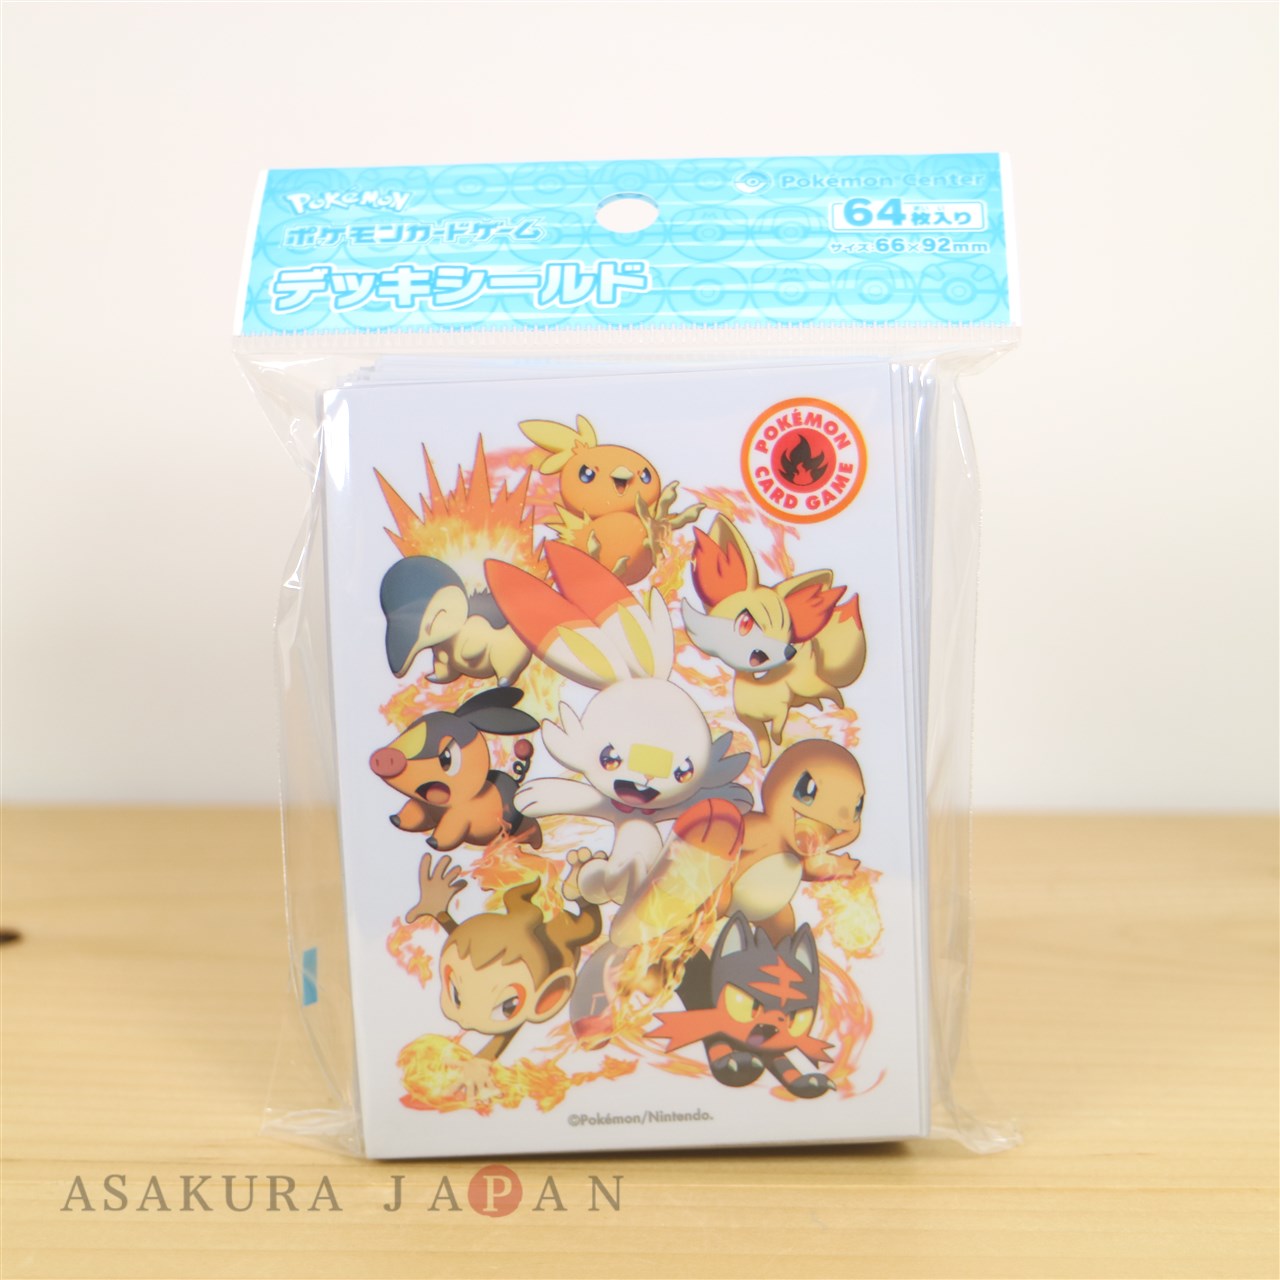 64 Deck Sleeves Pokemon center JAPAN Alolan Ninetales Picnic Ship from USA 